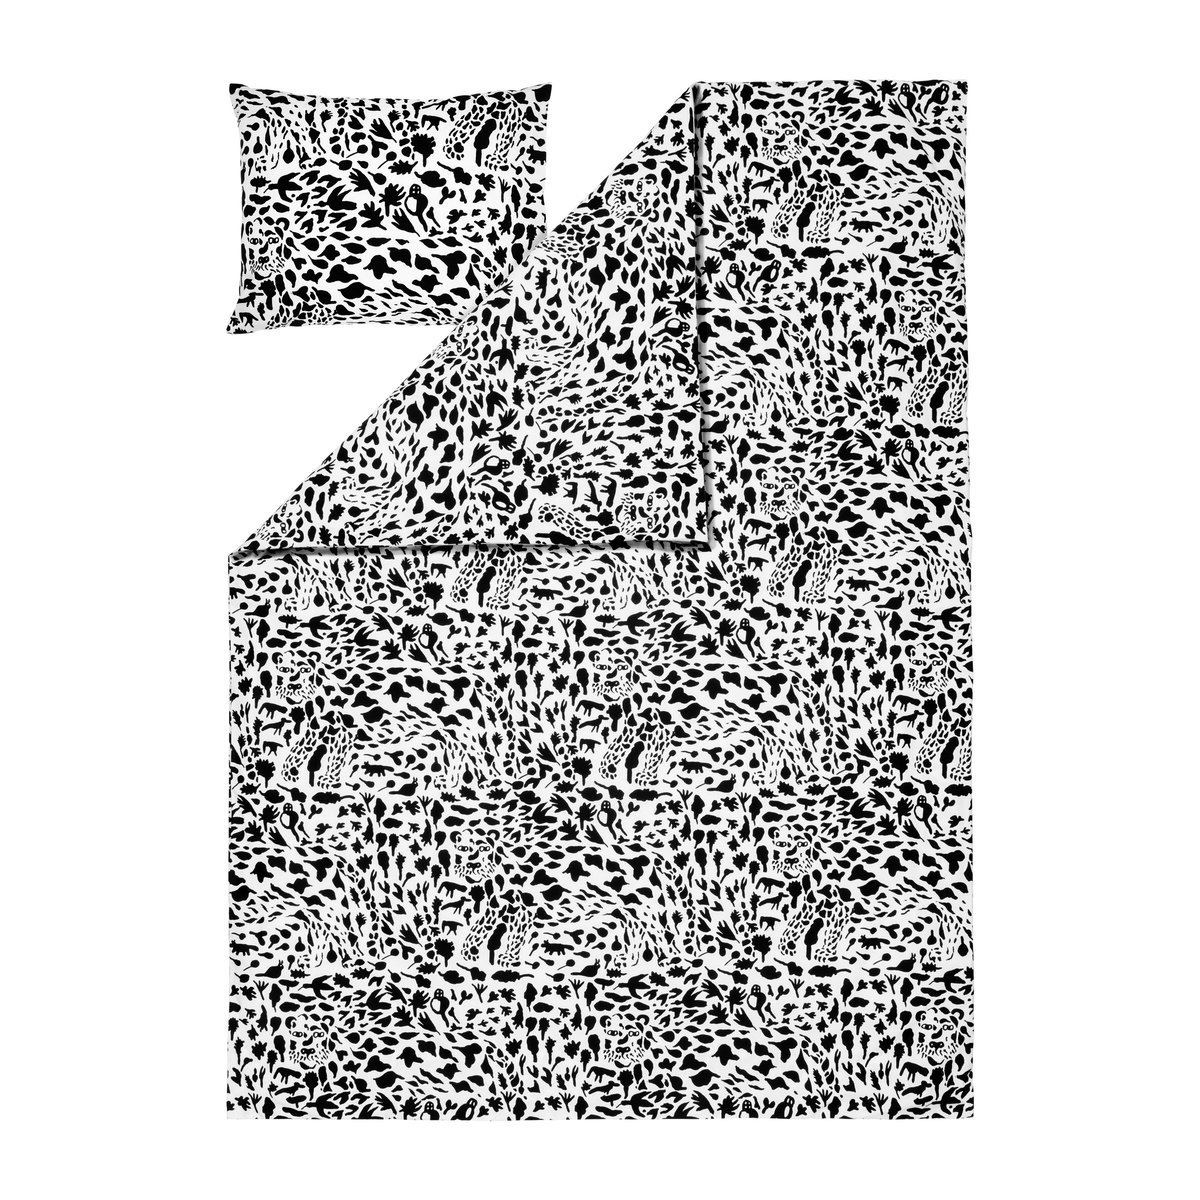 Iittala Oiva Toikka Cheetah beddengoedset 150x210 cm Zwart-wit